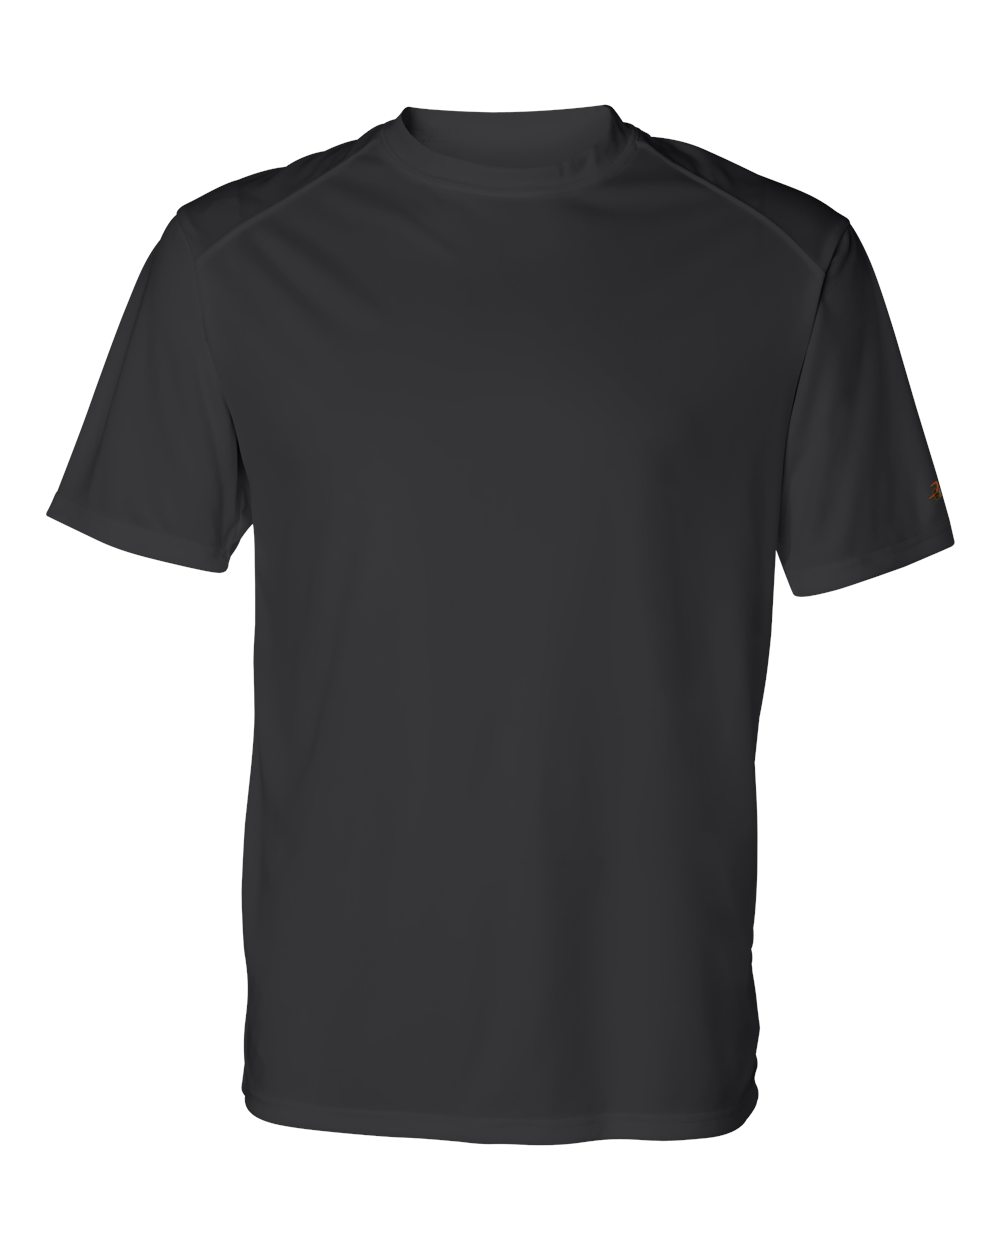 B-Core - Sport Shoulders T-Shirt - Campus Ink